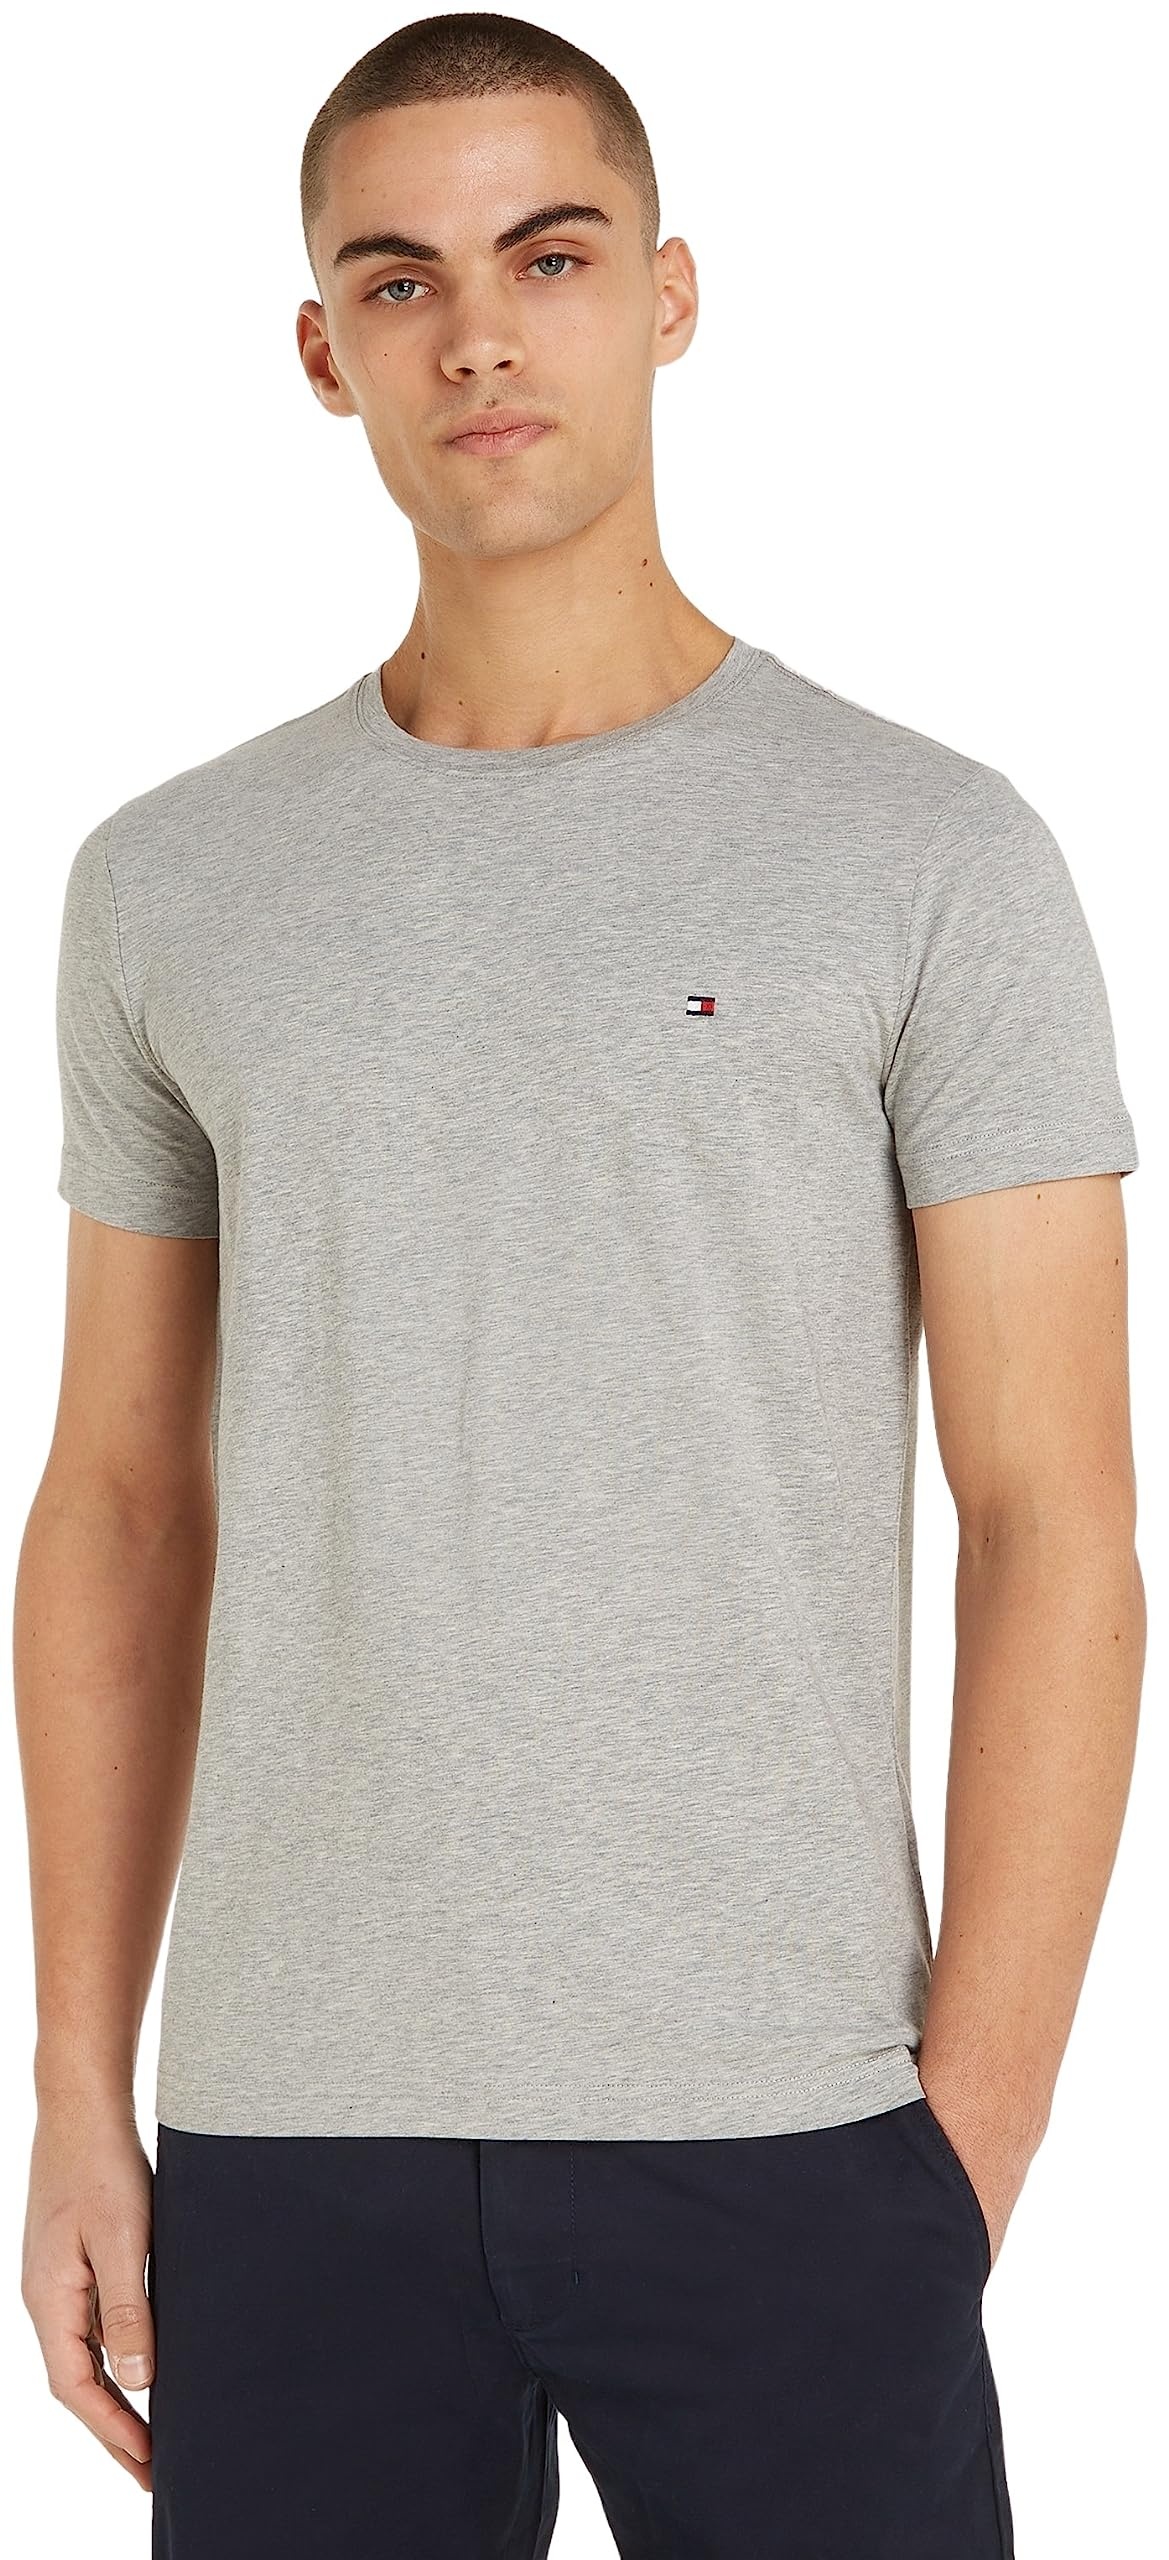 Tommy Hilfiger Herren T-Shirt Kurzarm Core Stretch Slim Fit, Grau (Light Grey Heather), S